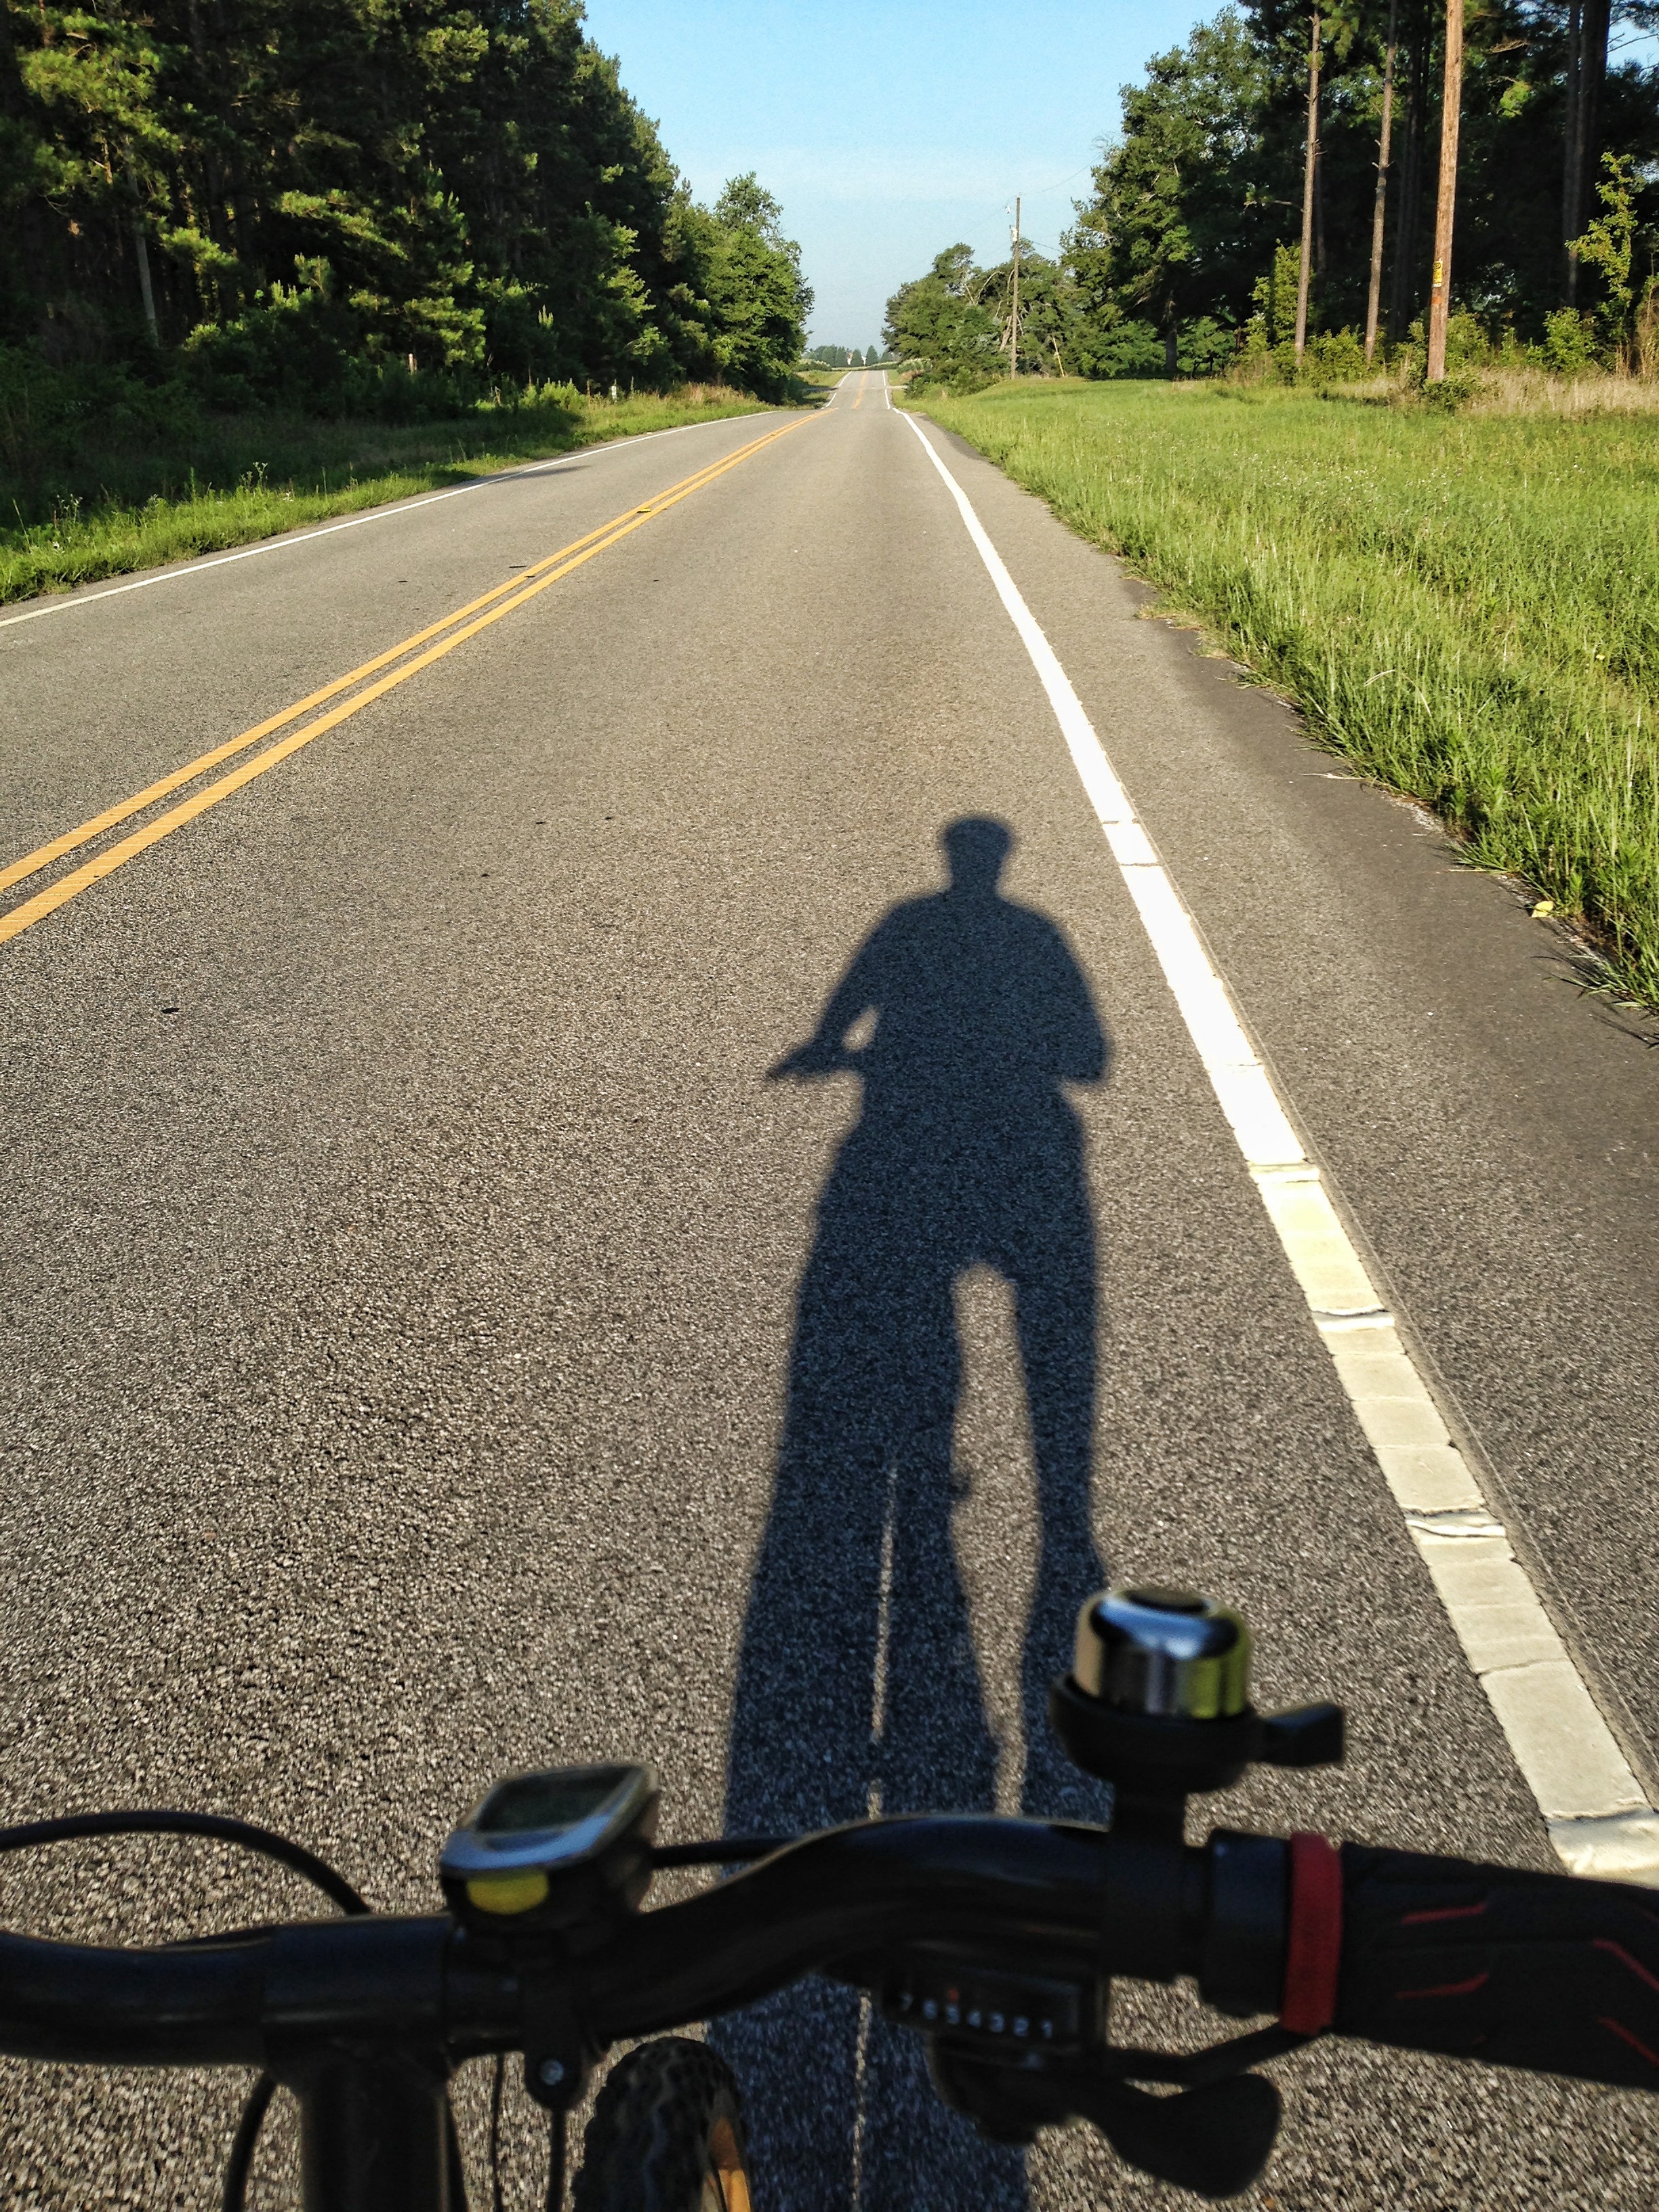 Shadow Of Cyclist, Cycling, Rural Road, road, shadow